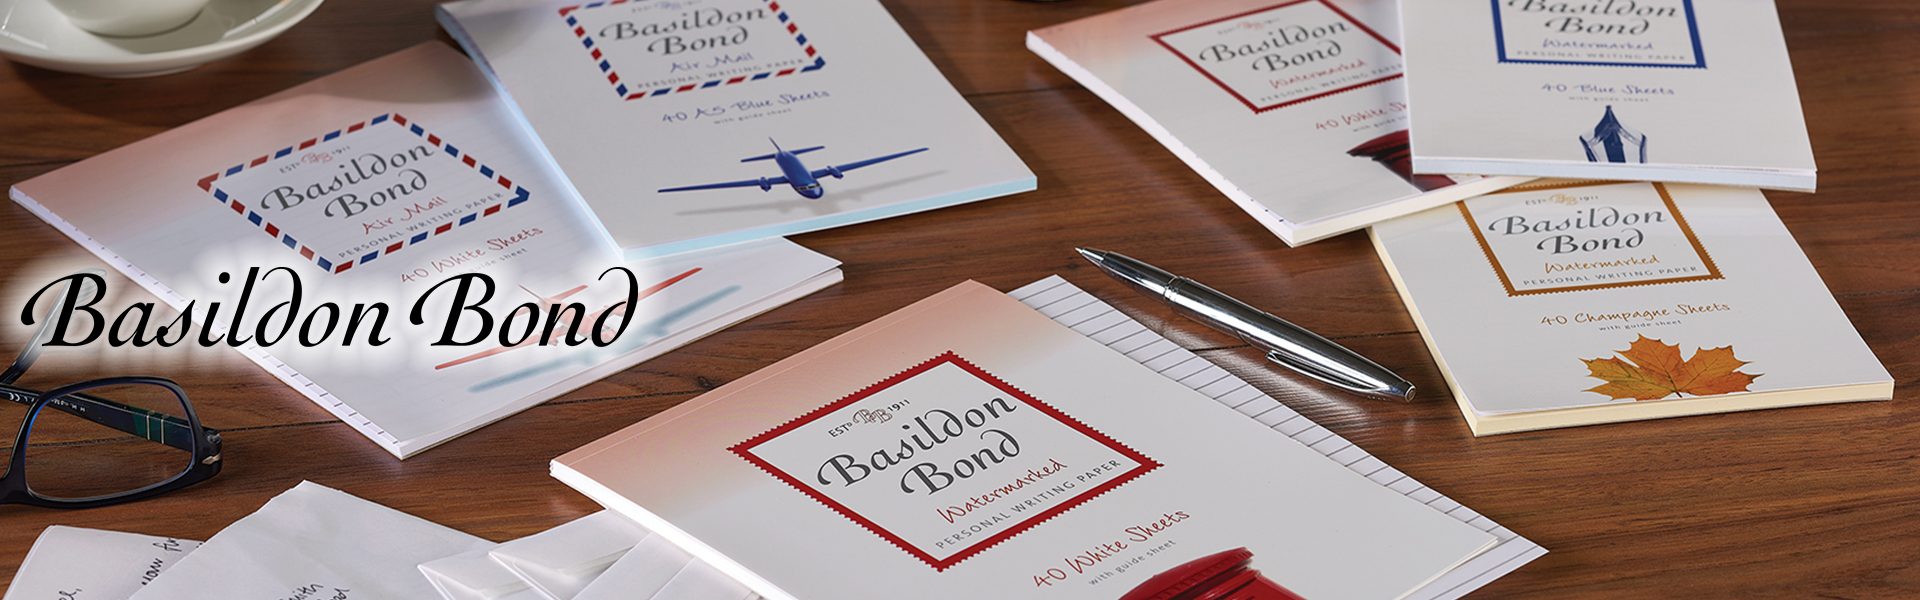 Basildon Bond envelopes with Watermark colour choice Medium size 